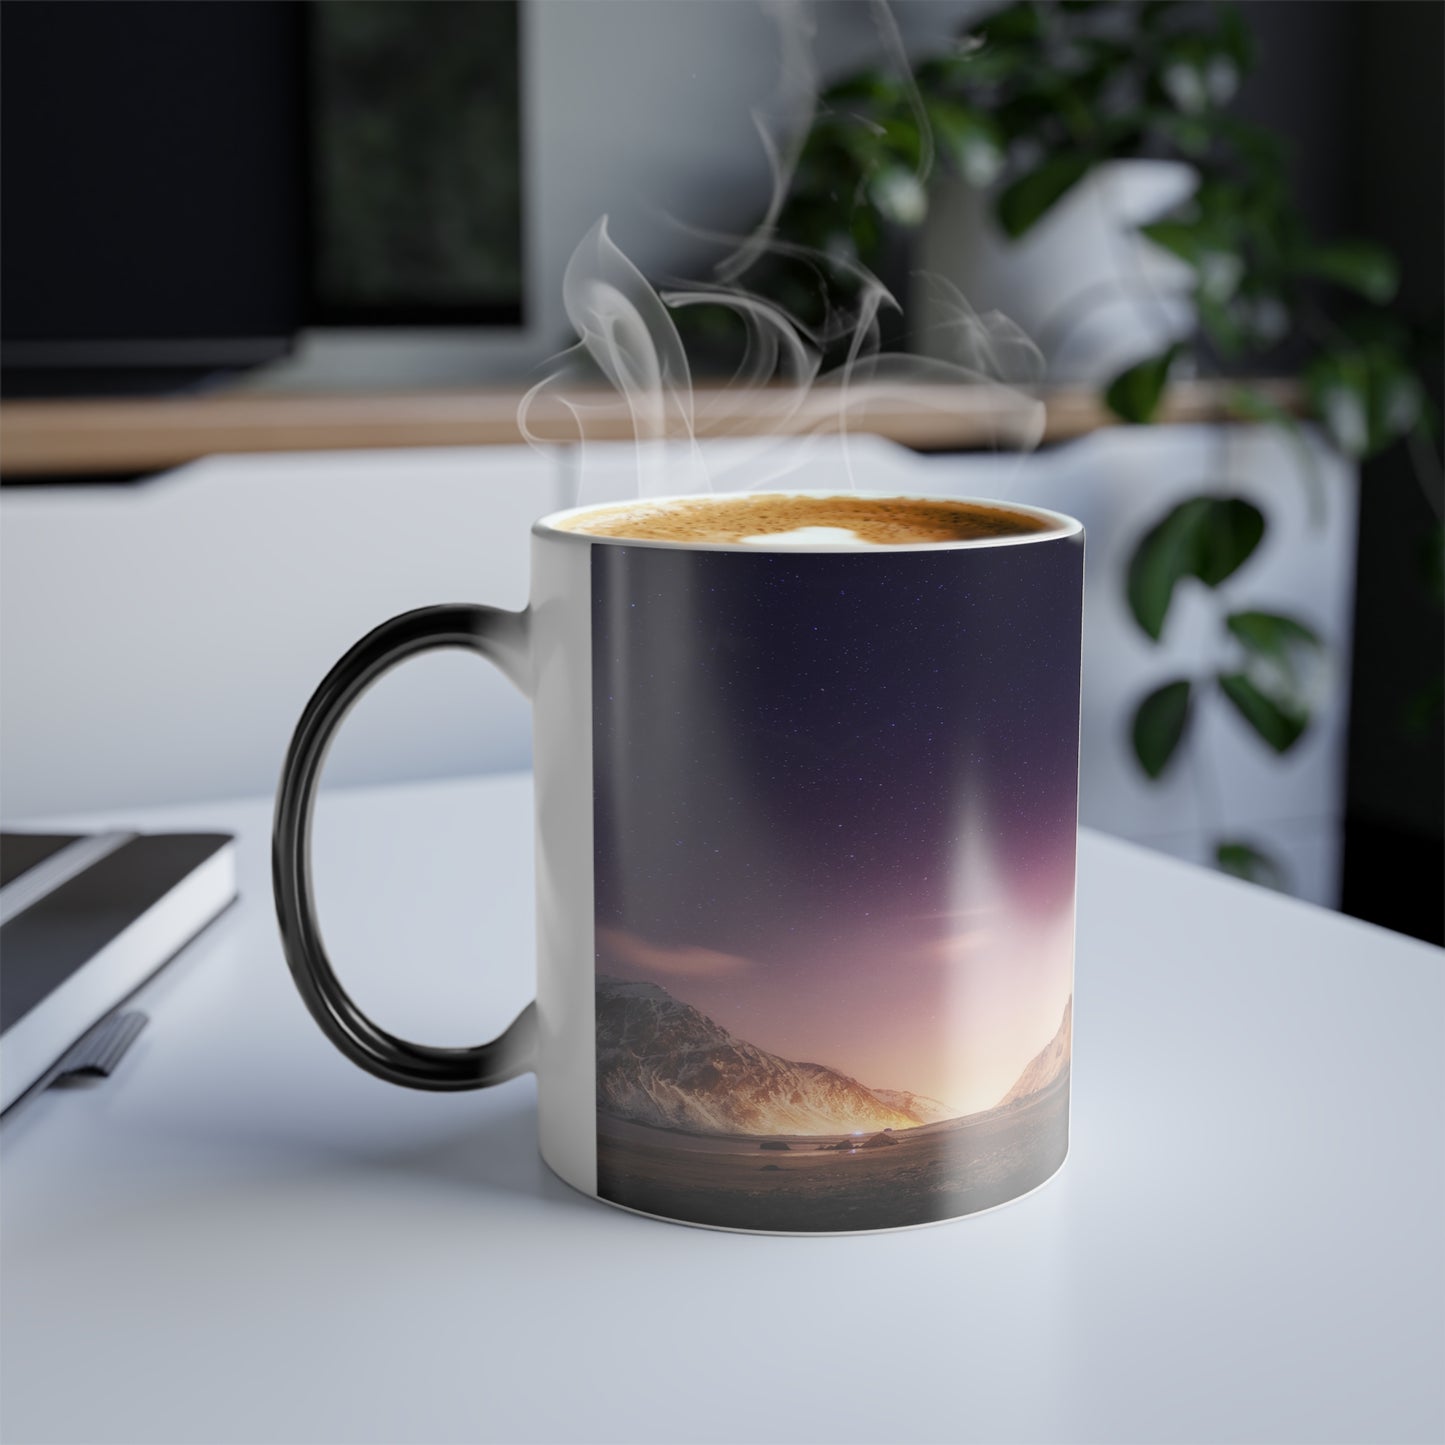 Enchanting Aurora Borealis Heat Sensitive Mug - Northern Lights Magic Color Morphing Mug 11oz - Heat Reactive Night Sky Coffee Cup - Perfect Gift for Nature Lovers 7